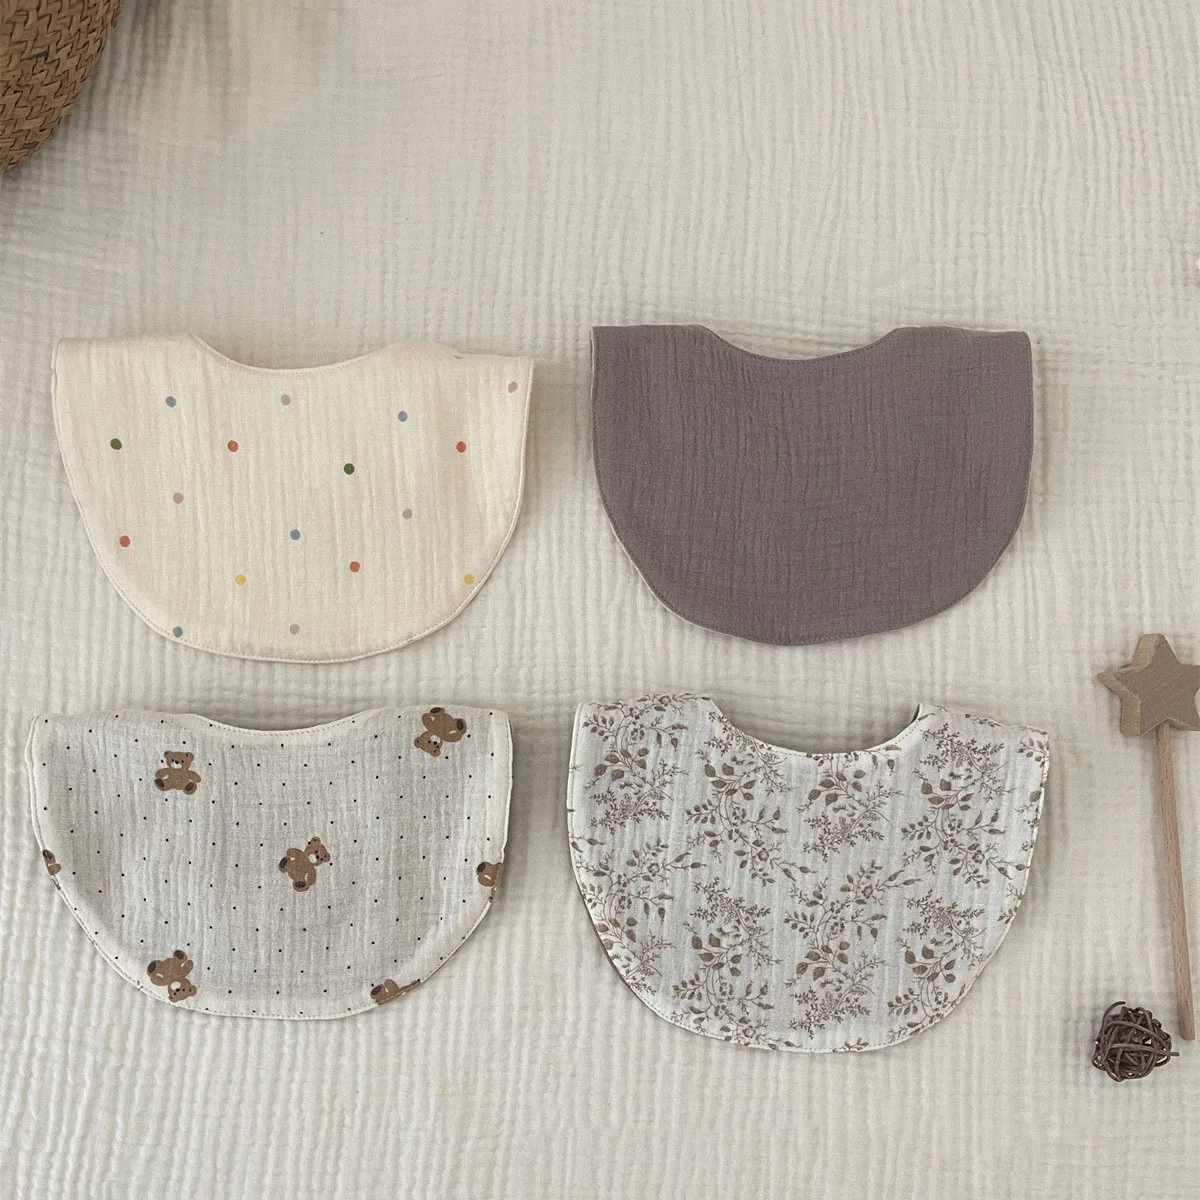 Snap Muslin Cotton Baby Bibs Infants Feeding Bib 6 Layers  Muslin Baby Bandana Burp Cloths Soft Drool Bibs for Toddlers